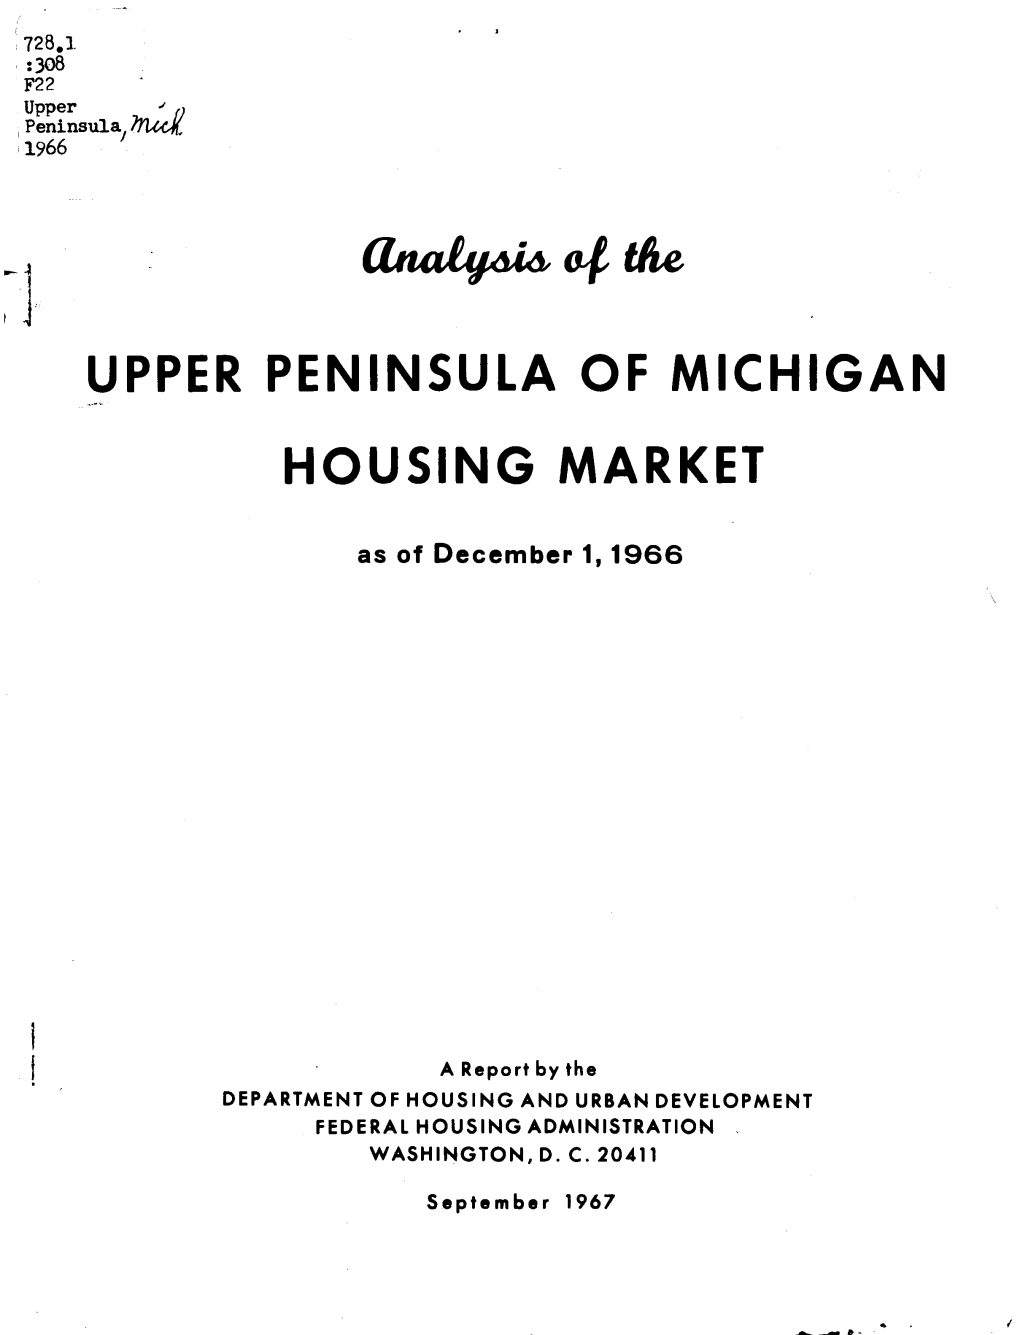 Analysis of the Upper Peninsula of Michigan Housing Market (1966)